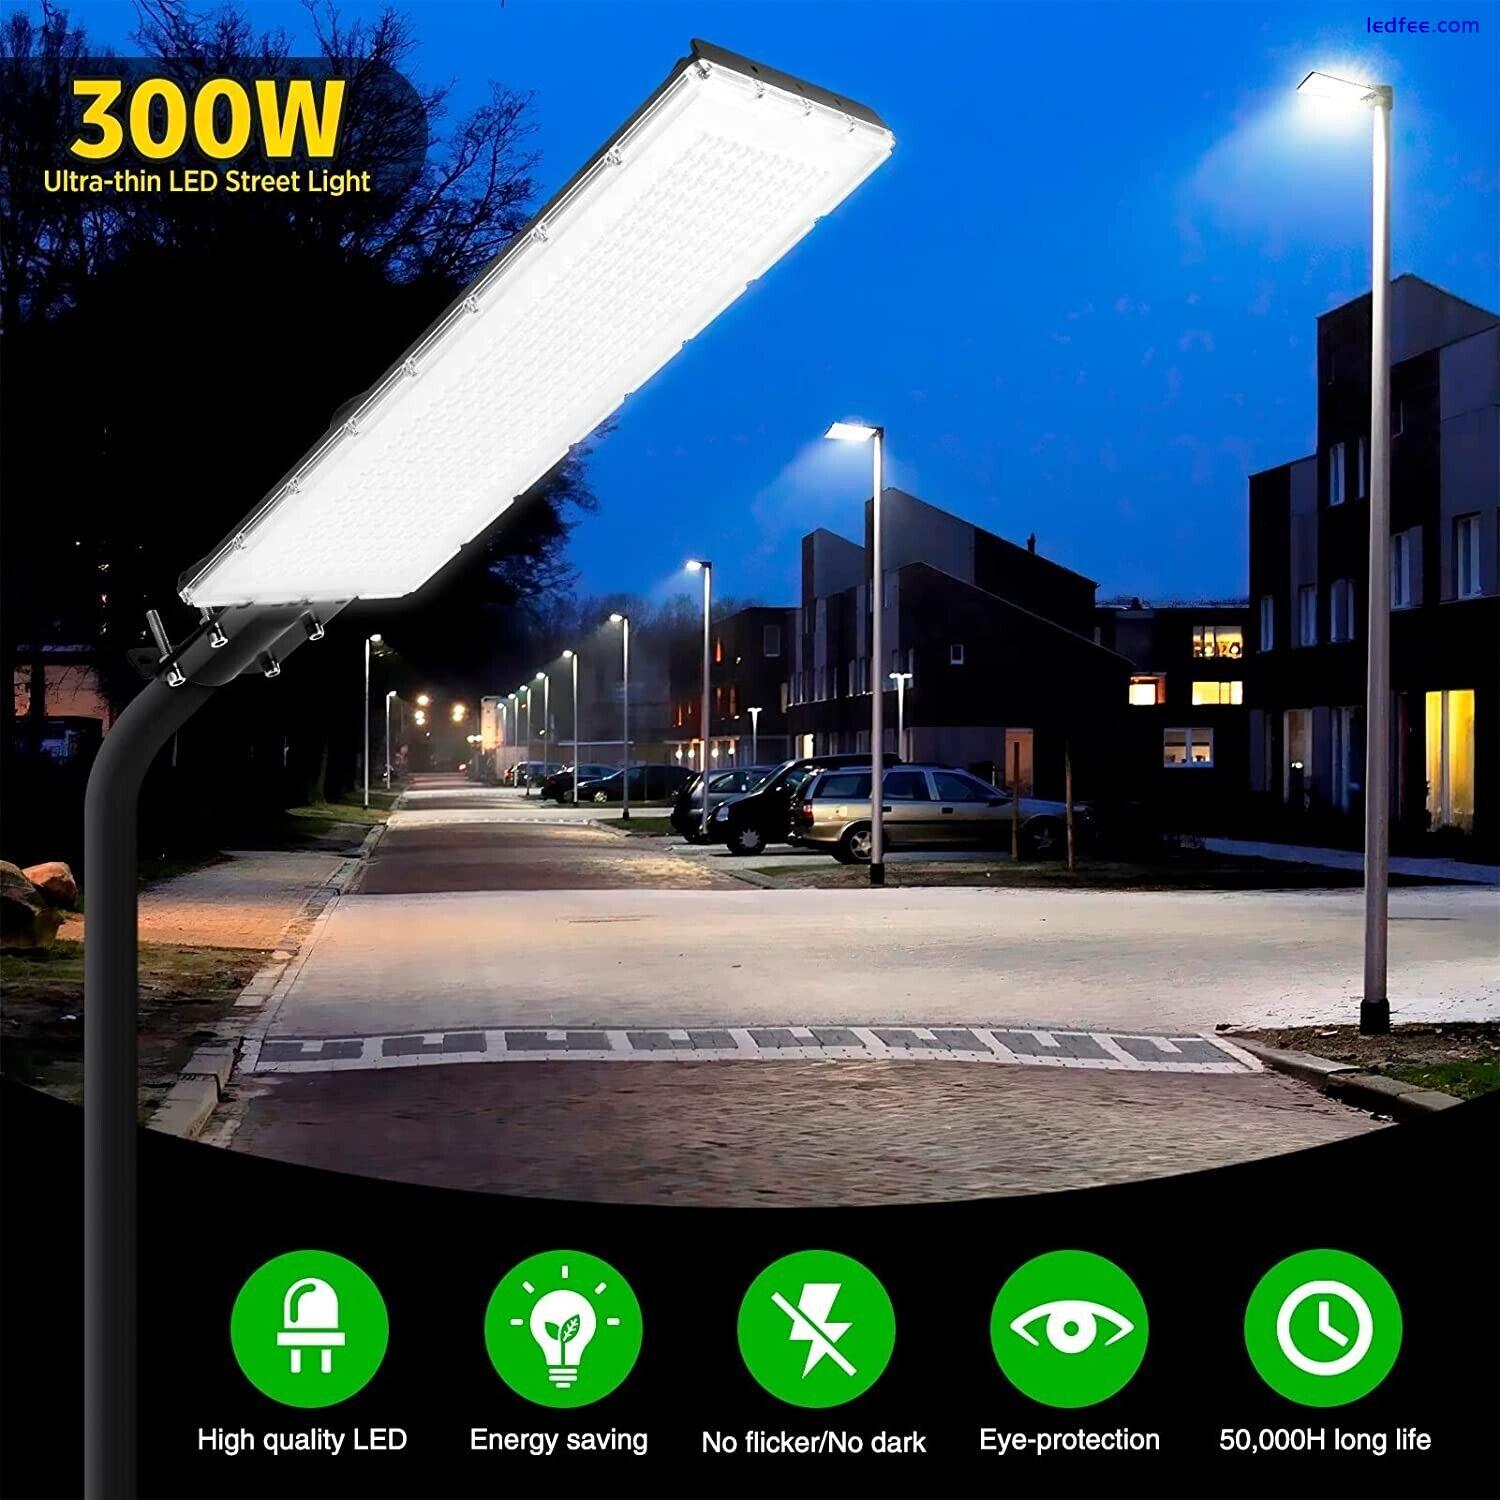 300W Parking Lot Lights Outdoor 24000 LM LED Street Light Lamp Security Lighting 2 